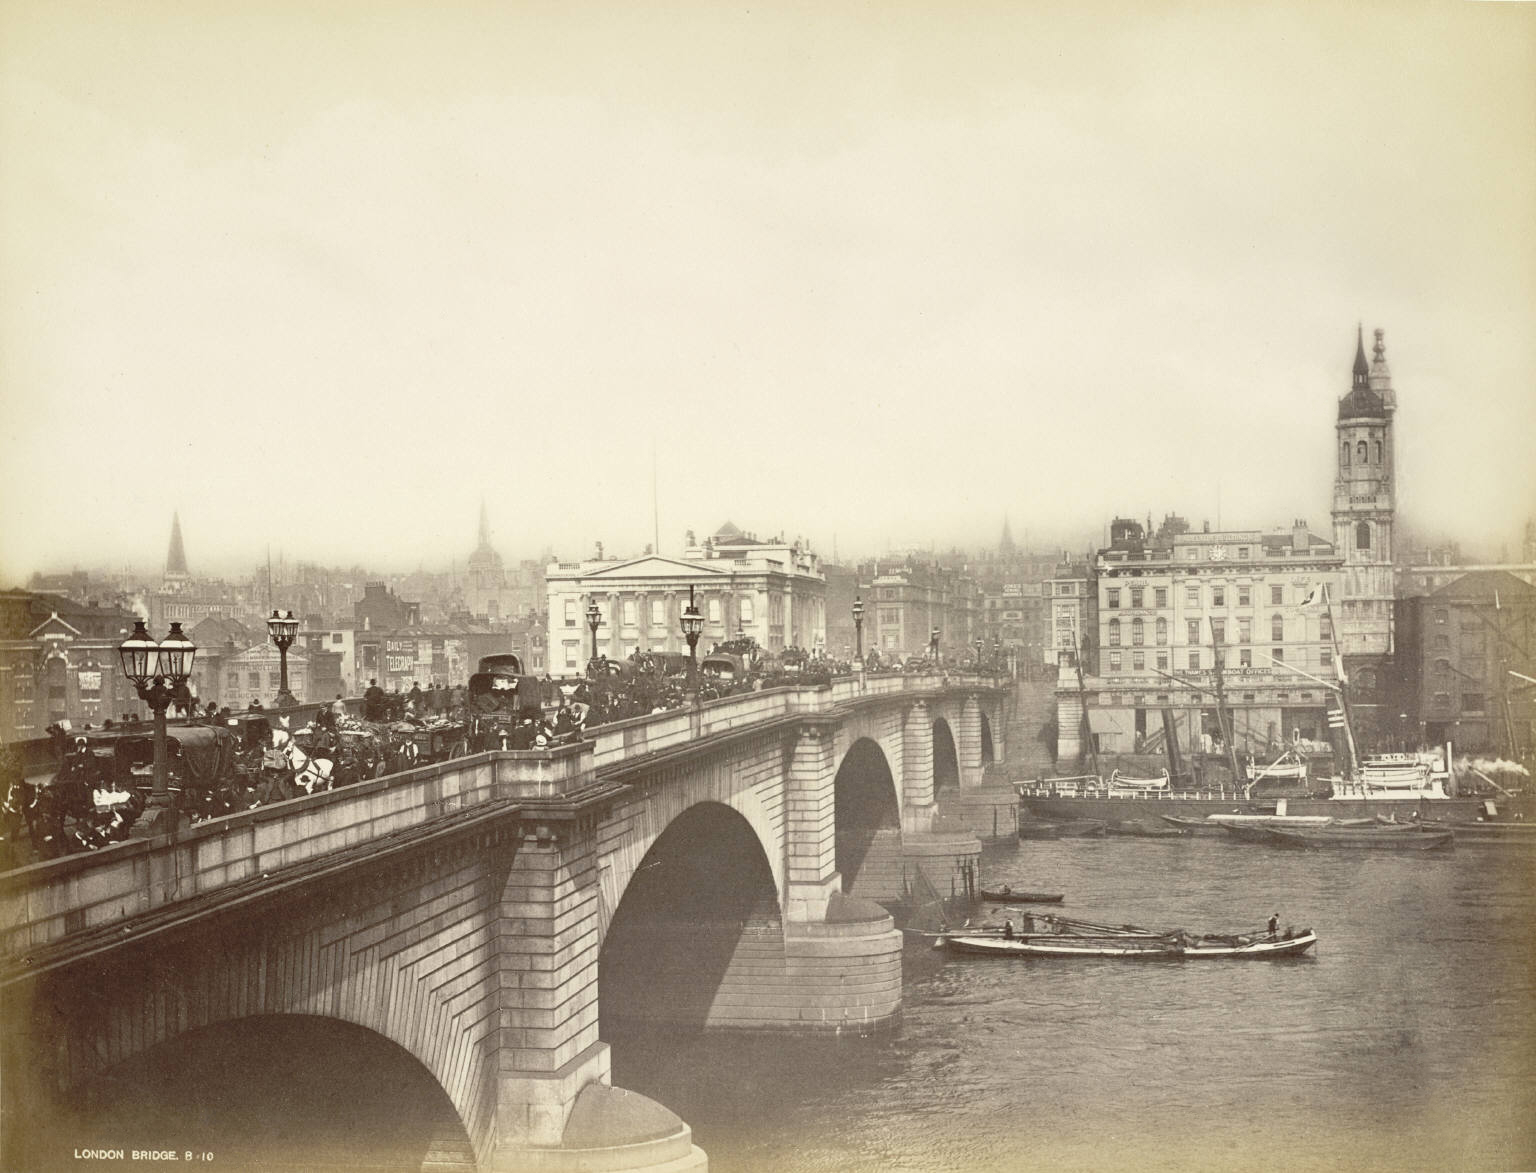 London Bridge Is Falling Down - Wikipedia